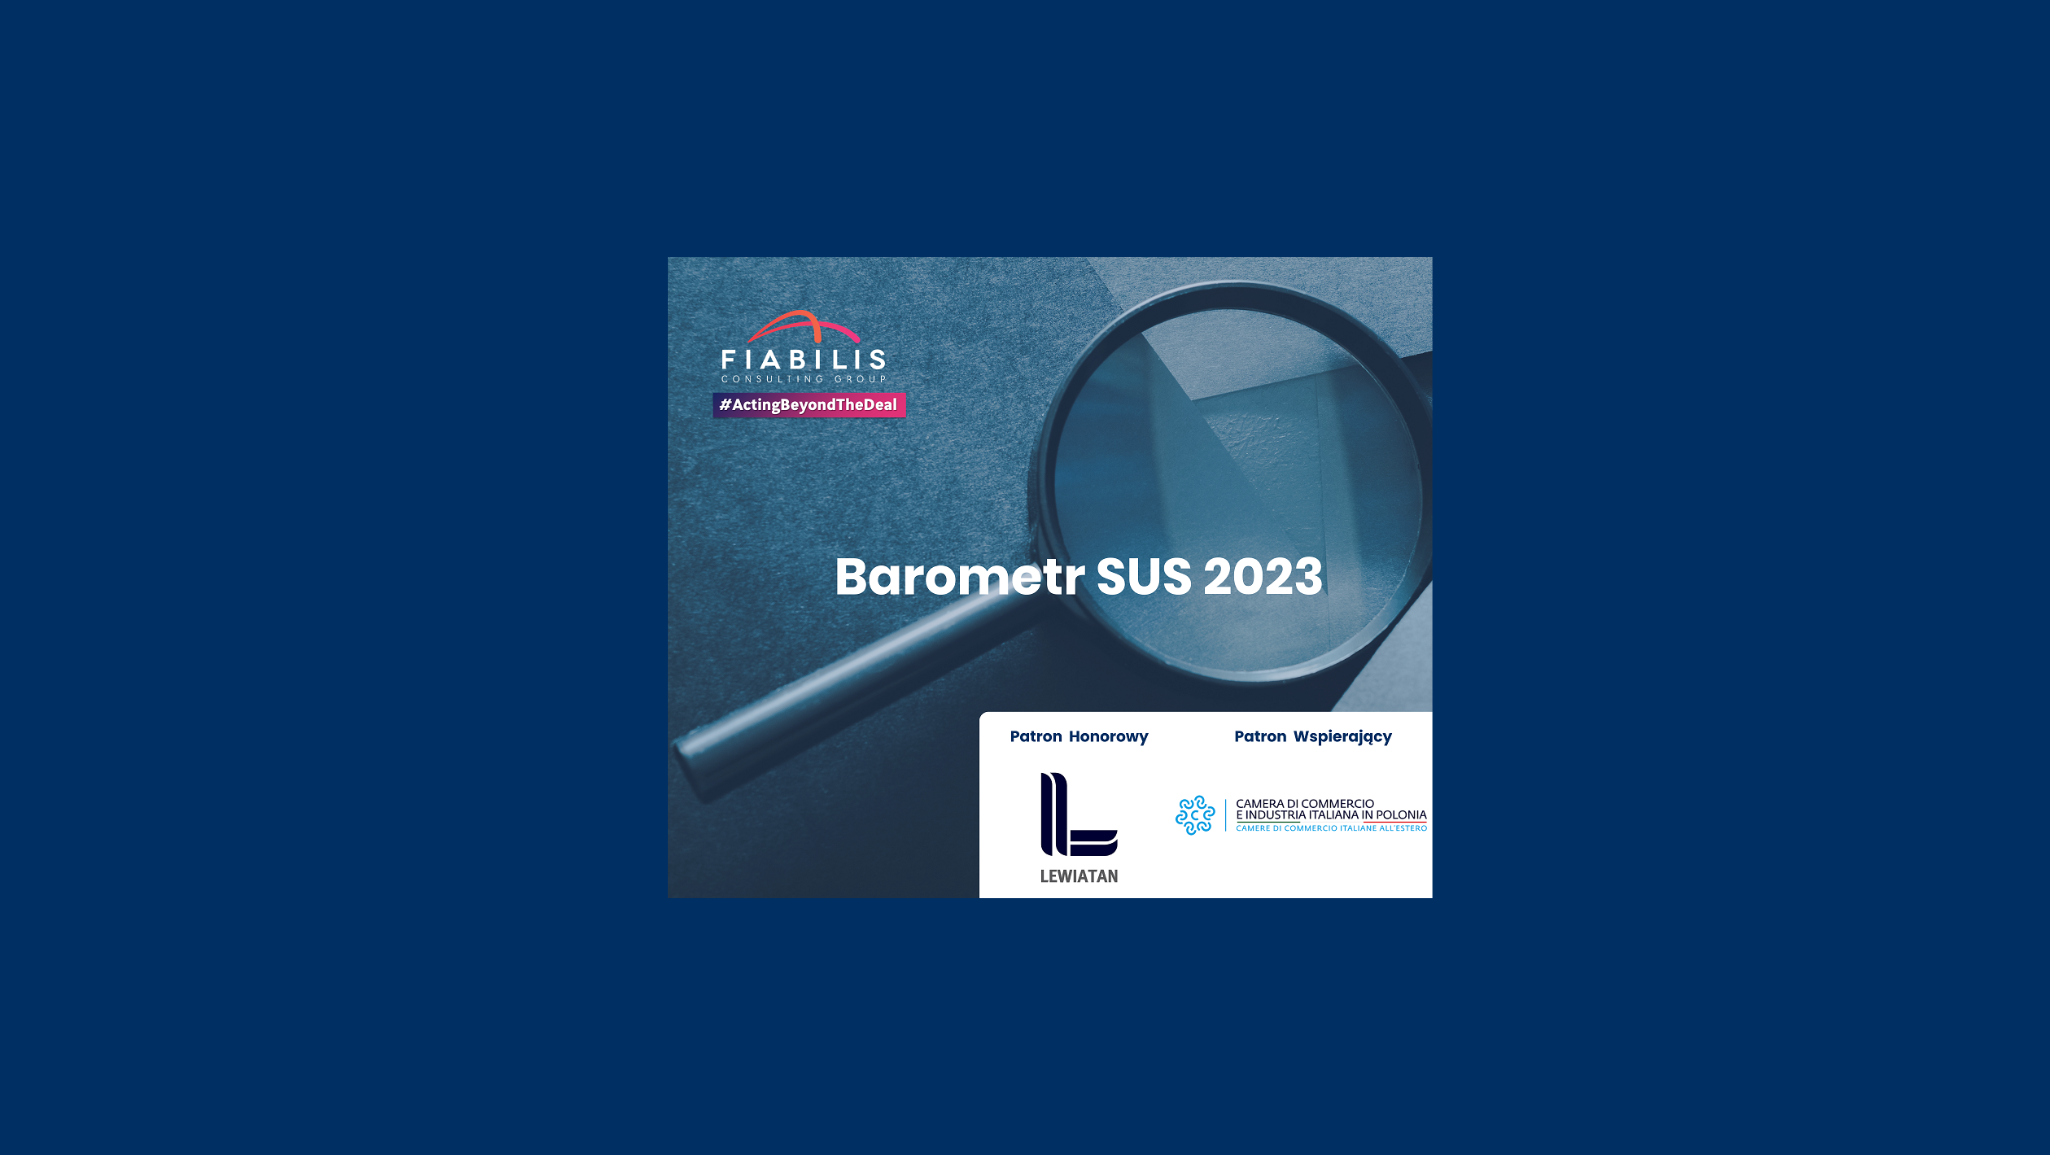 Barometr SUS 2023